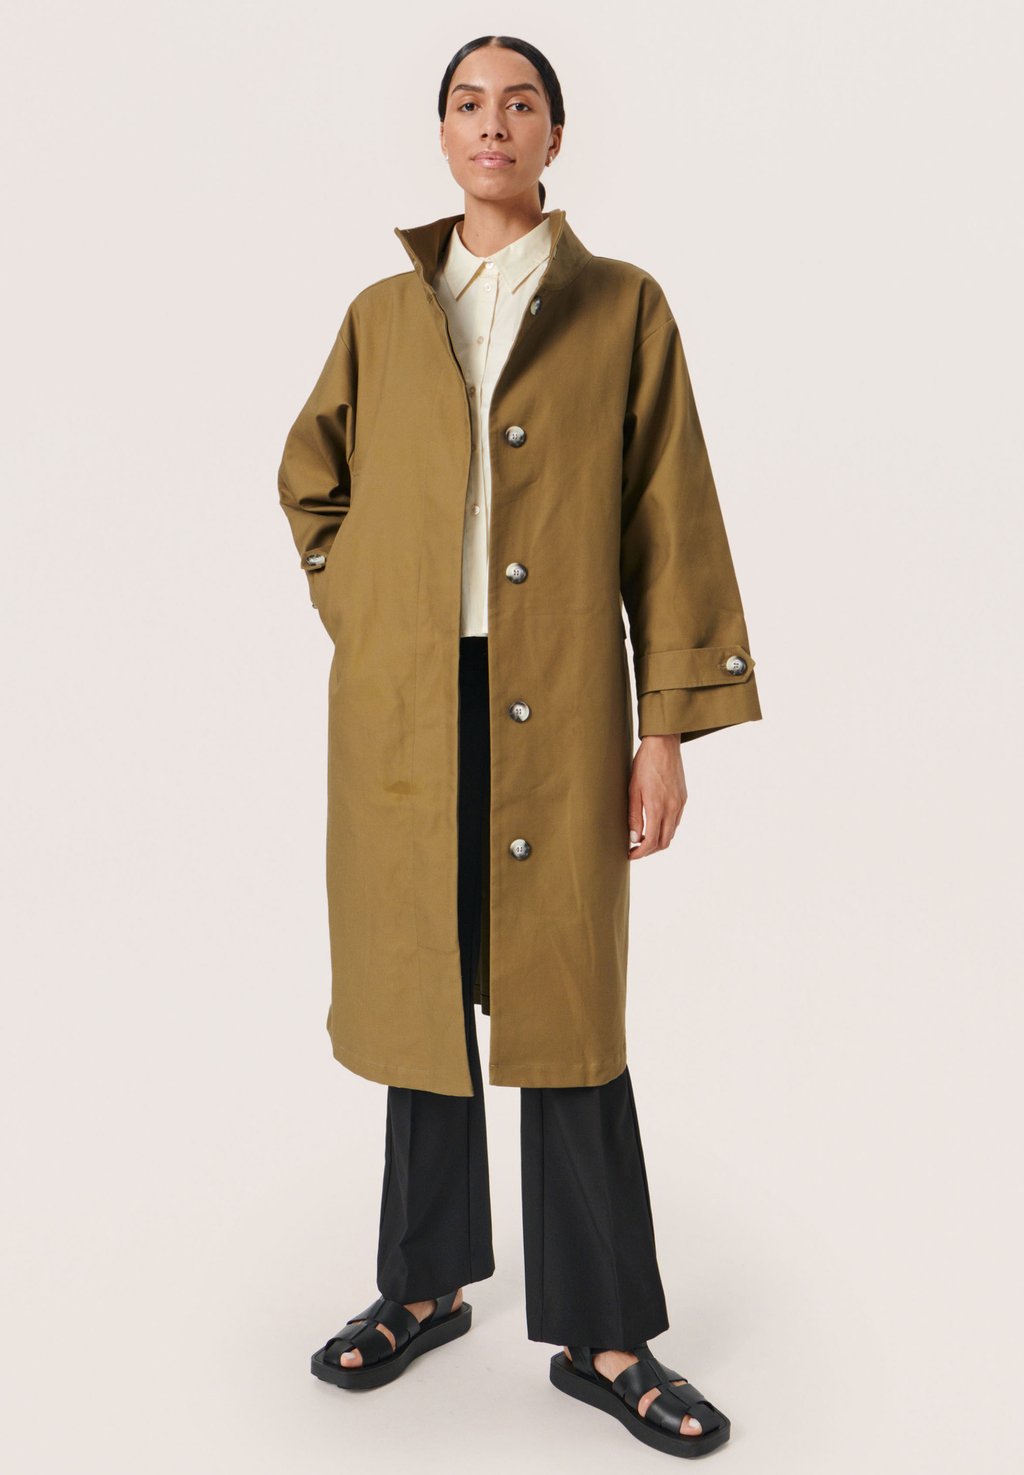 Классическое пальто Soaked in Luxury КАДЭ, цвет capers классическое пальто в клетку chicka soaked in luxury черный мульти